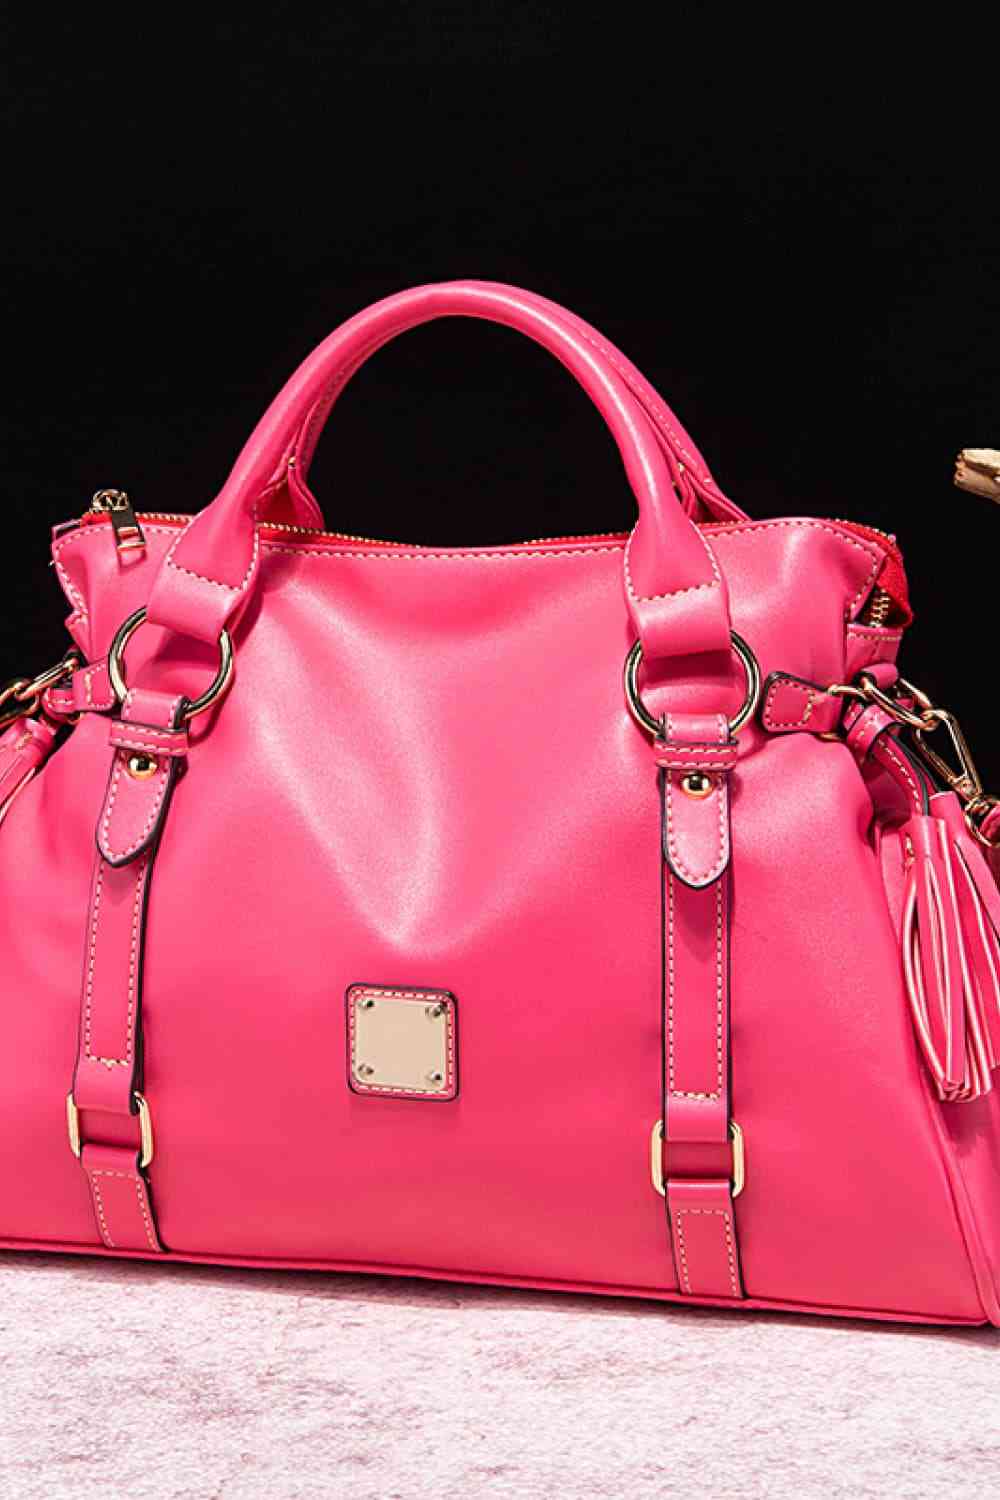 PU Leather Handbag with Tassels - Just Enuff Sexy